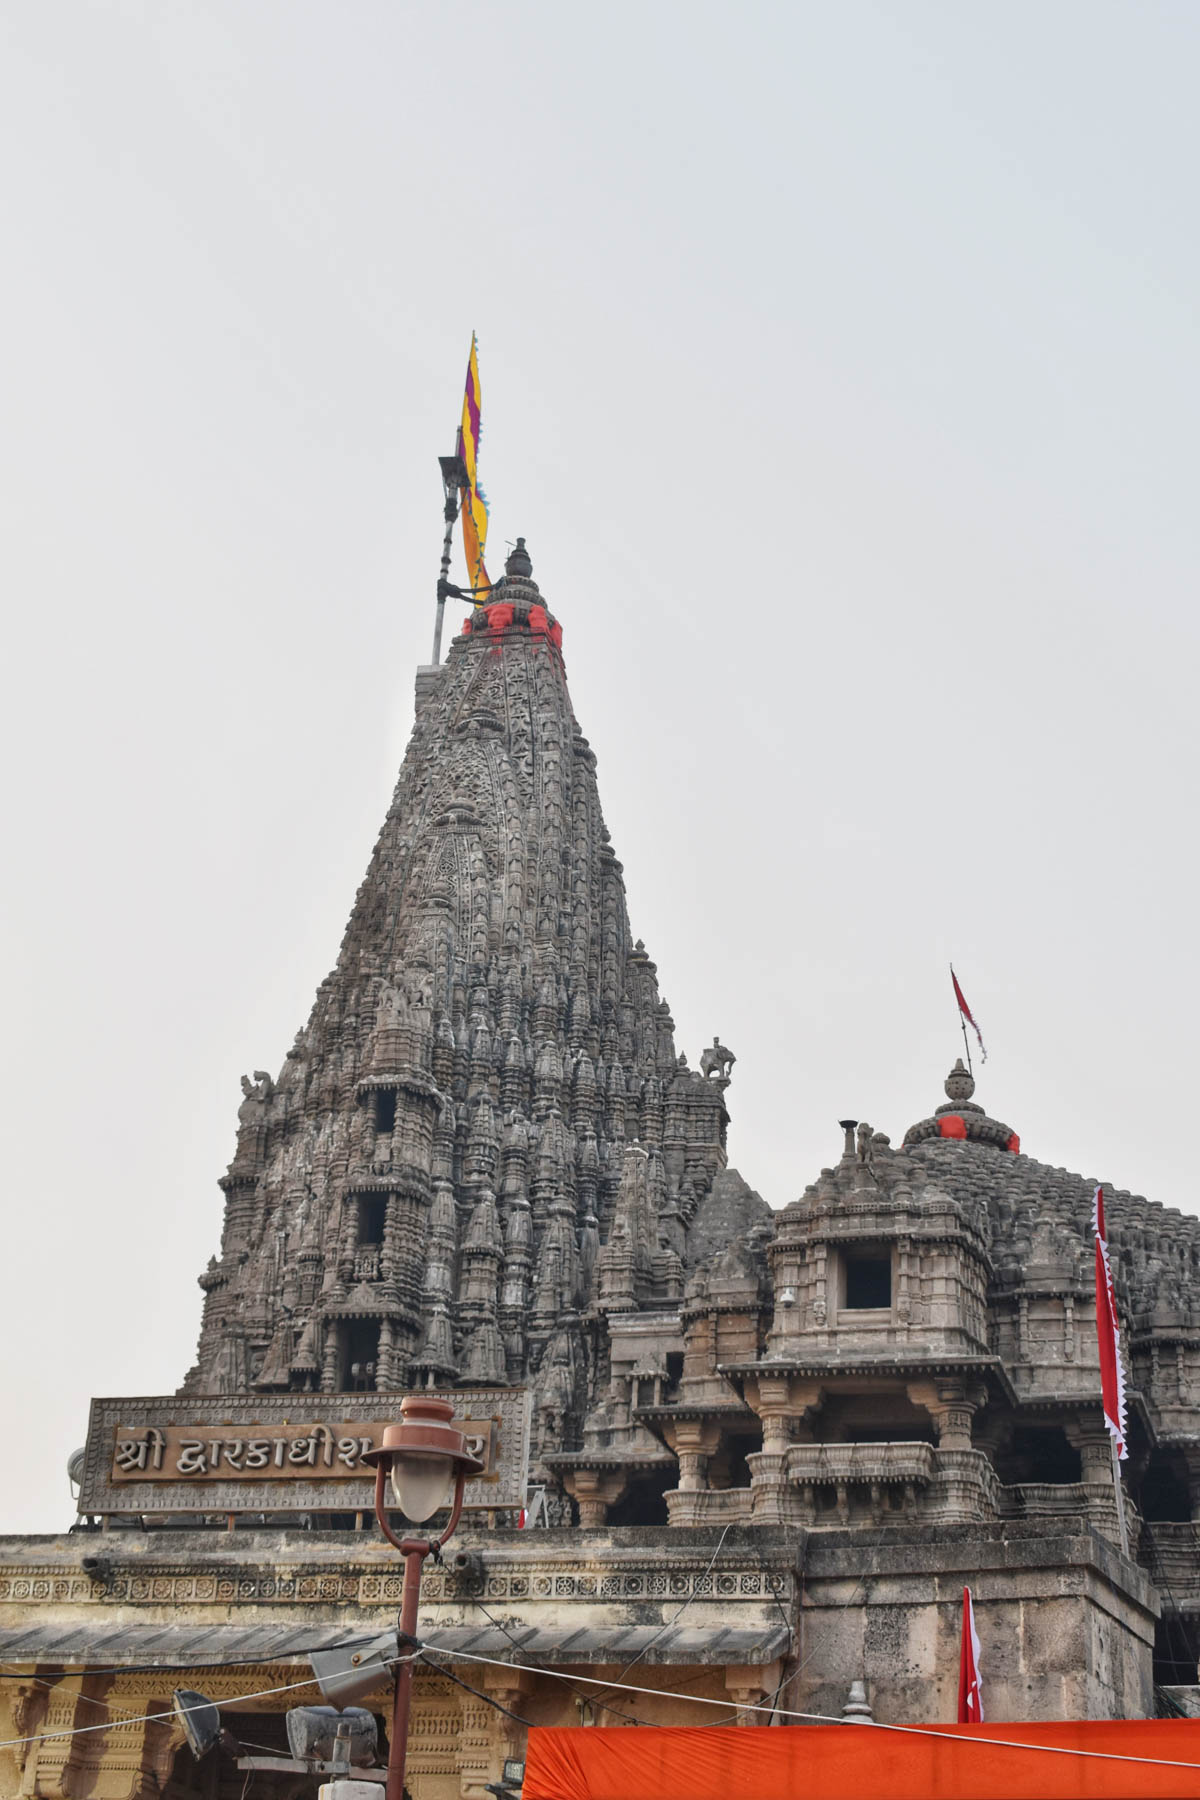 The grandeur of centuries-old Shri Dwarkadhish Temple, also known at 'Jagat Mandir'